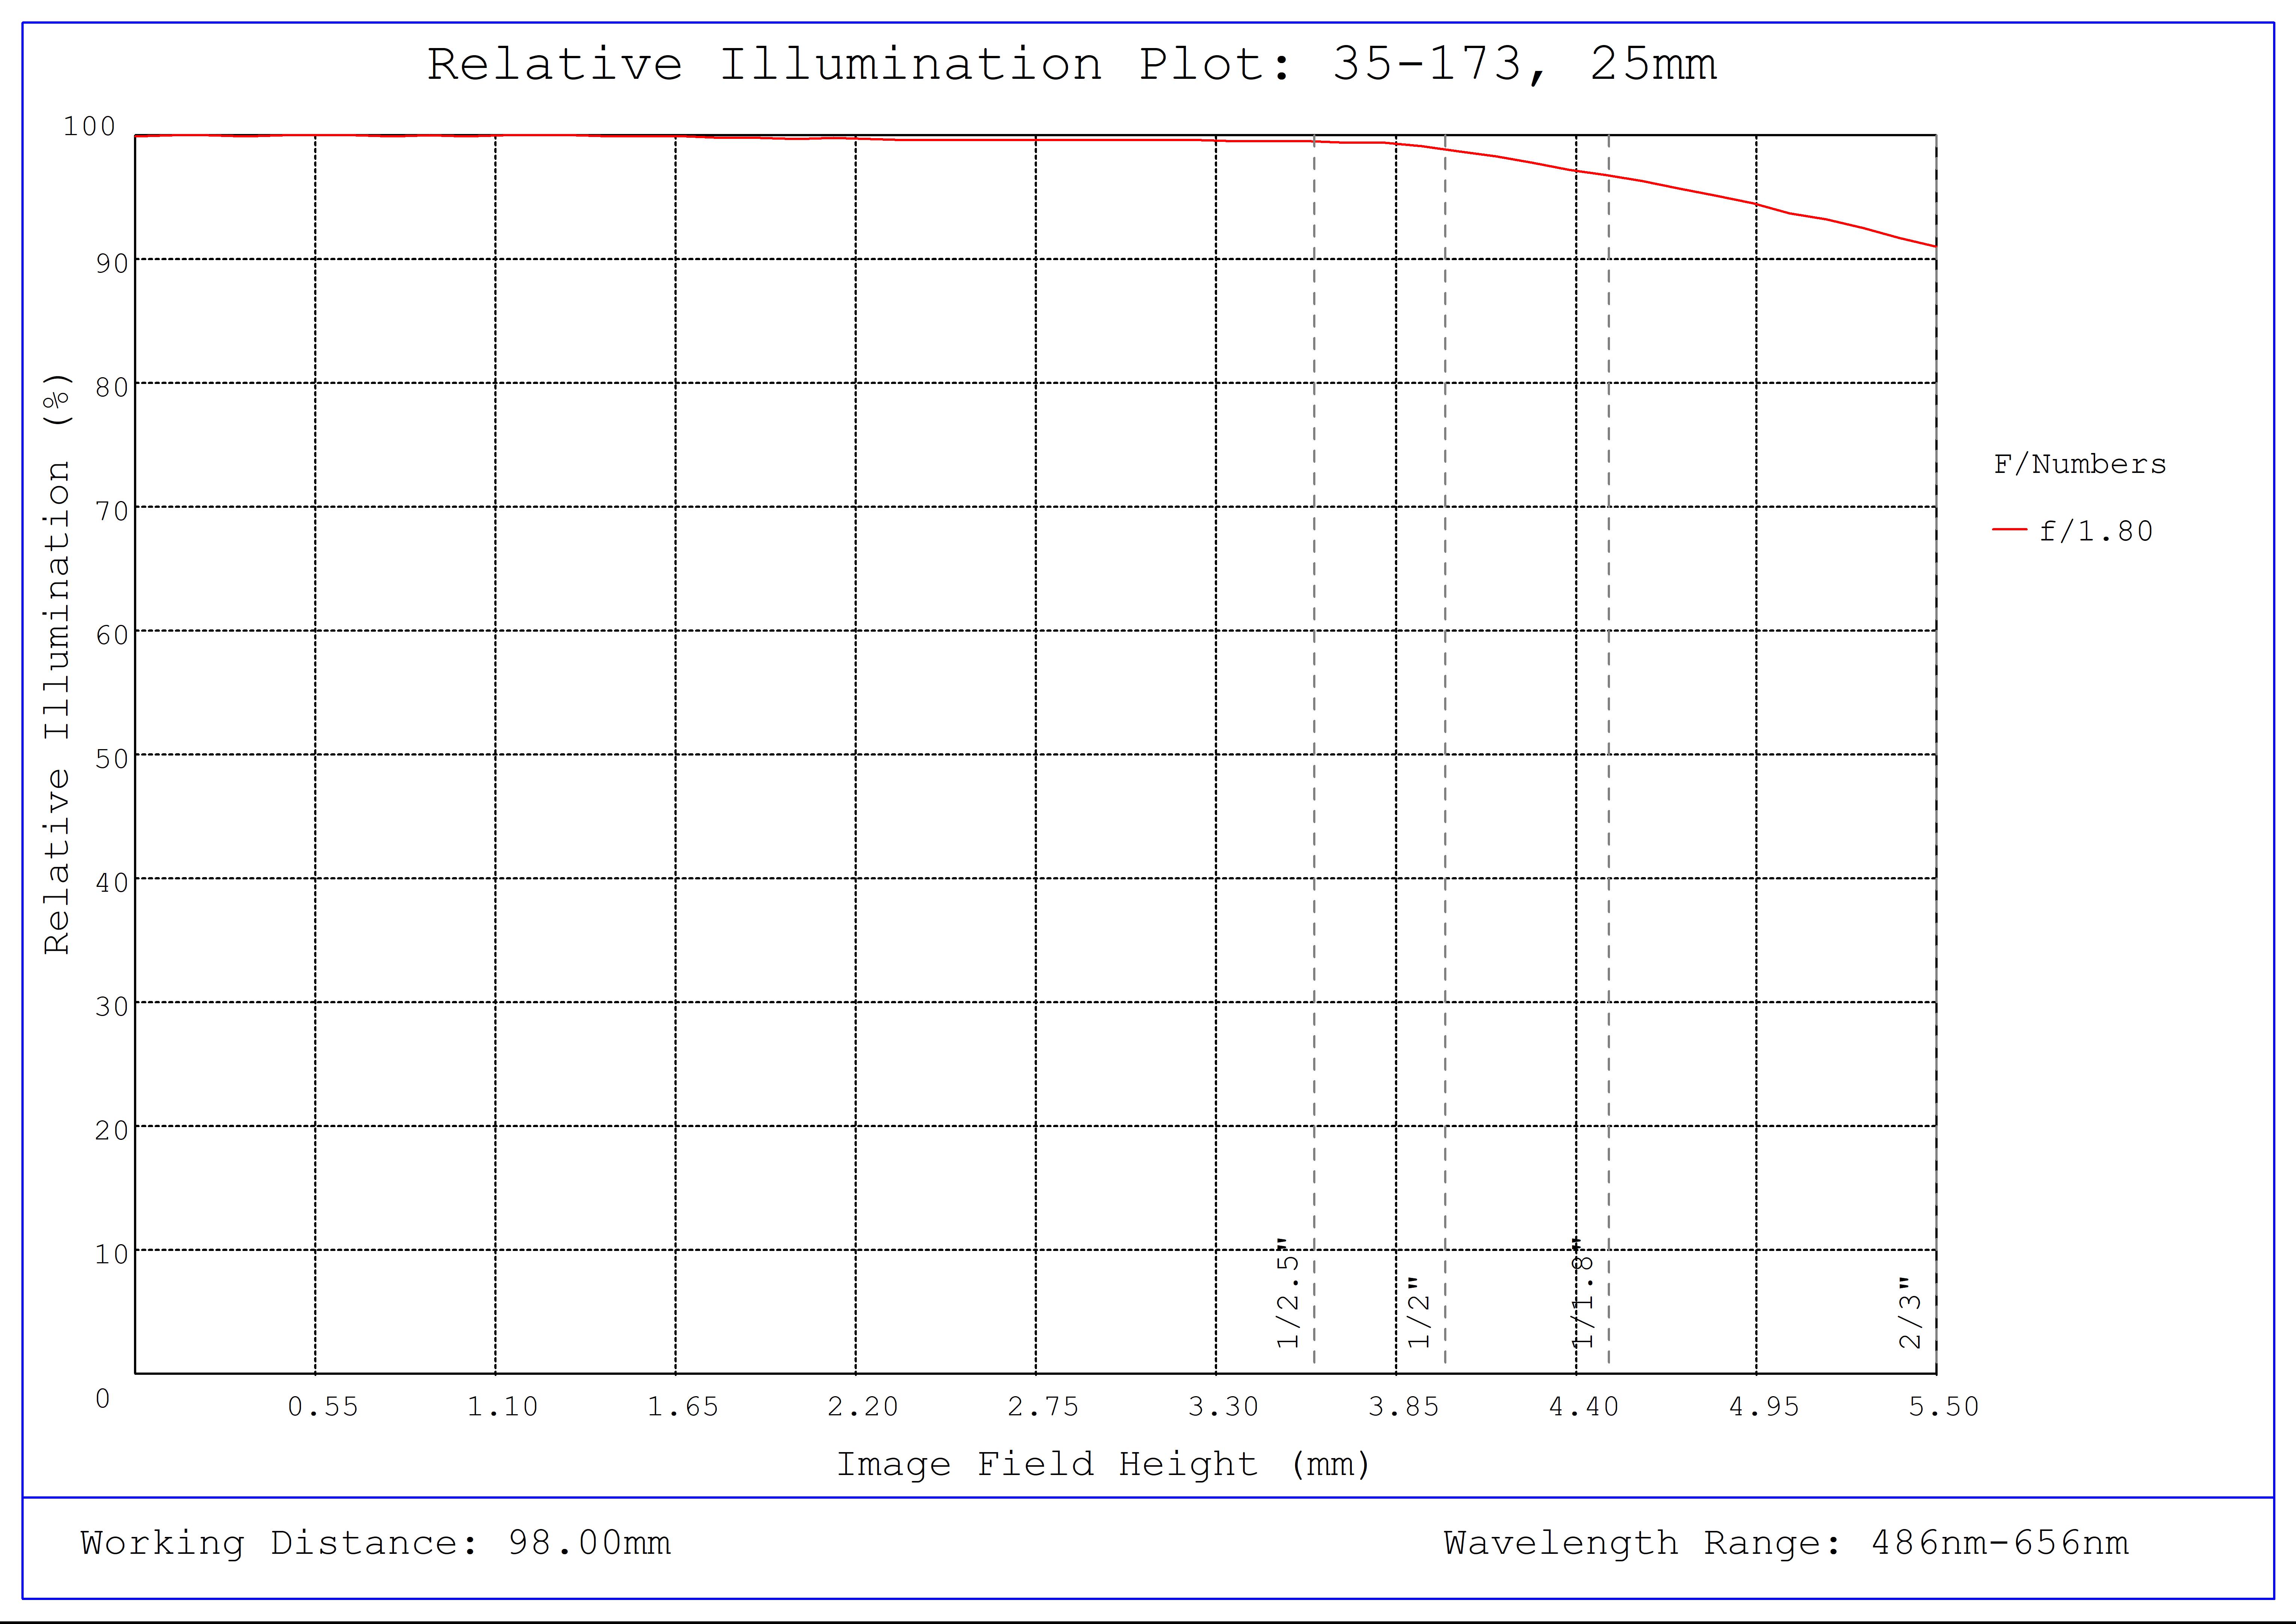 #35-173, 25mm, f/1.8 Cr Series Fixed Focal Length Lens, Relative Illumination Plot